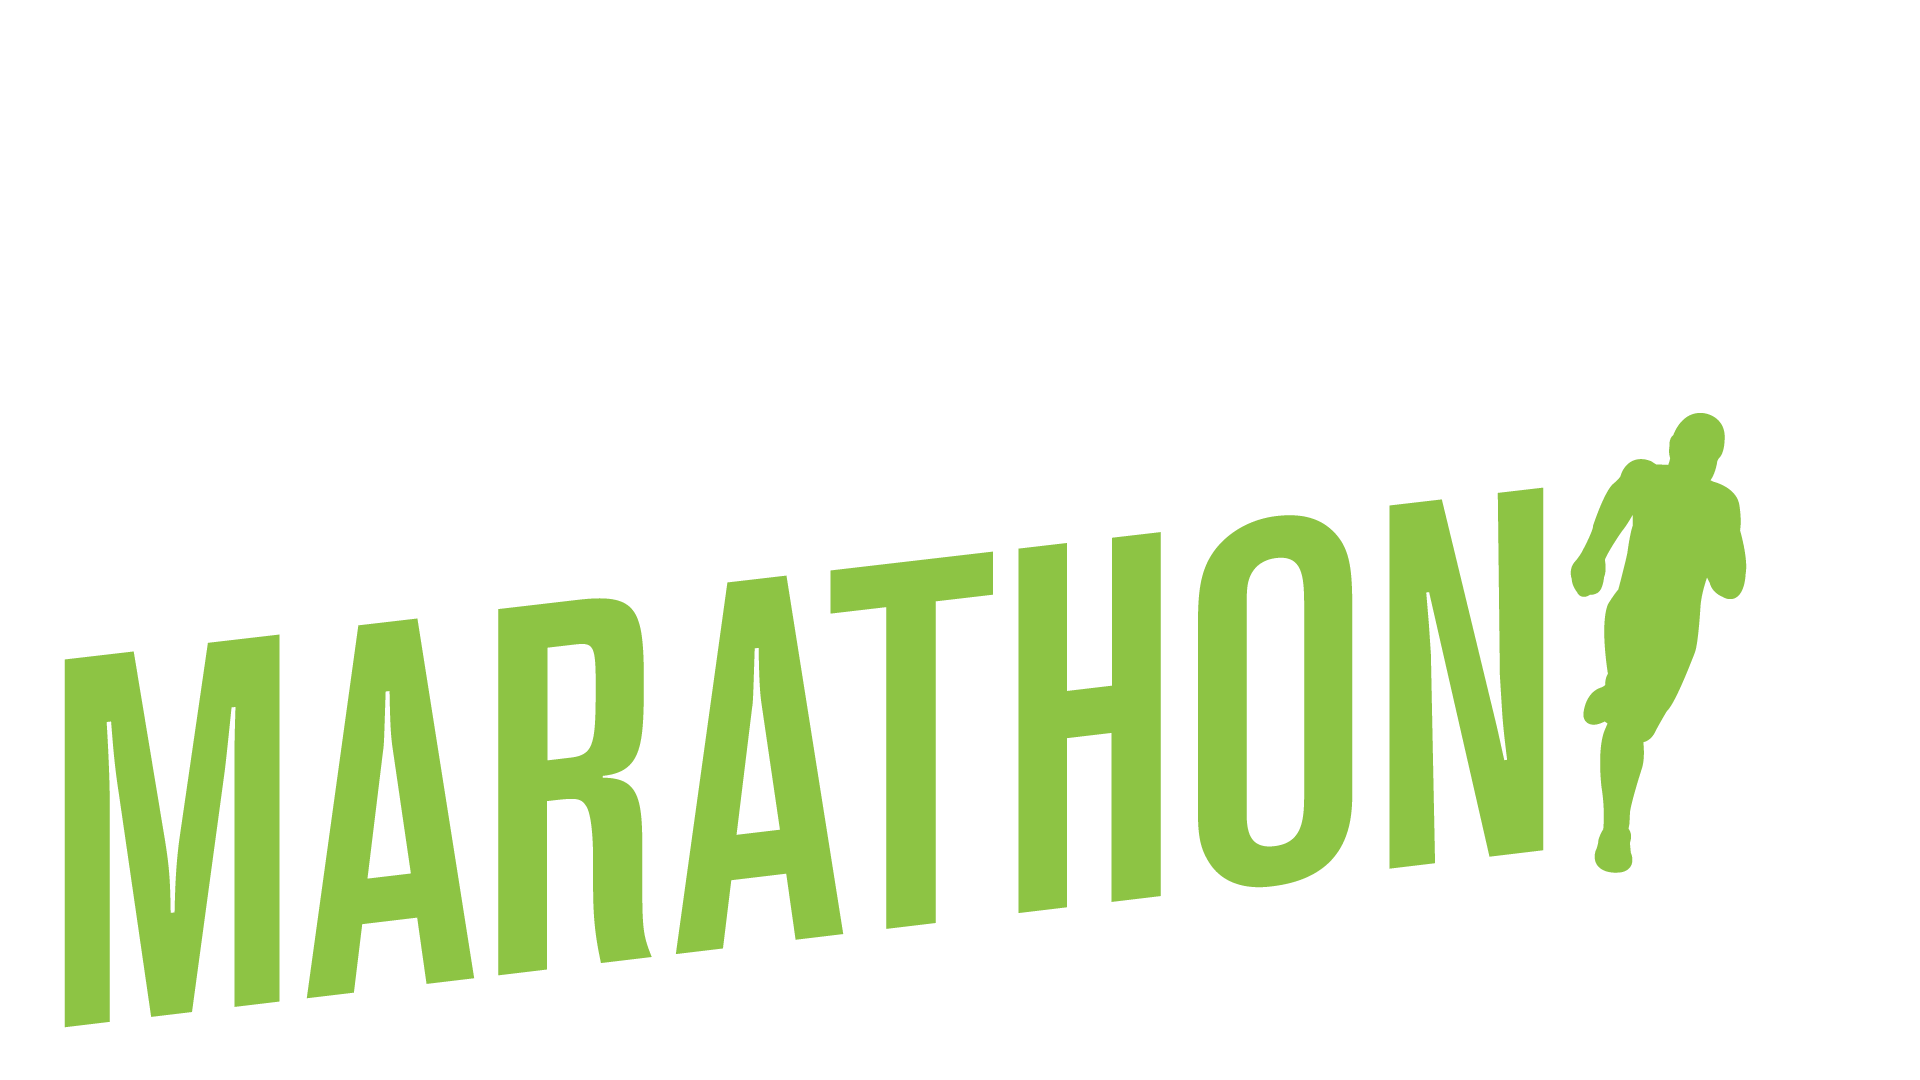 Marathon Logos